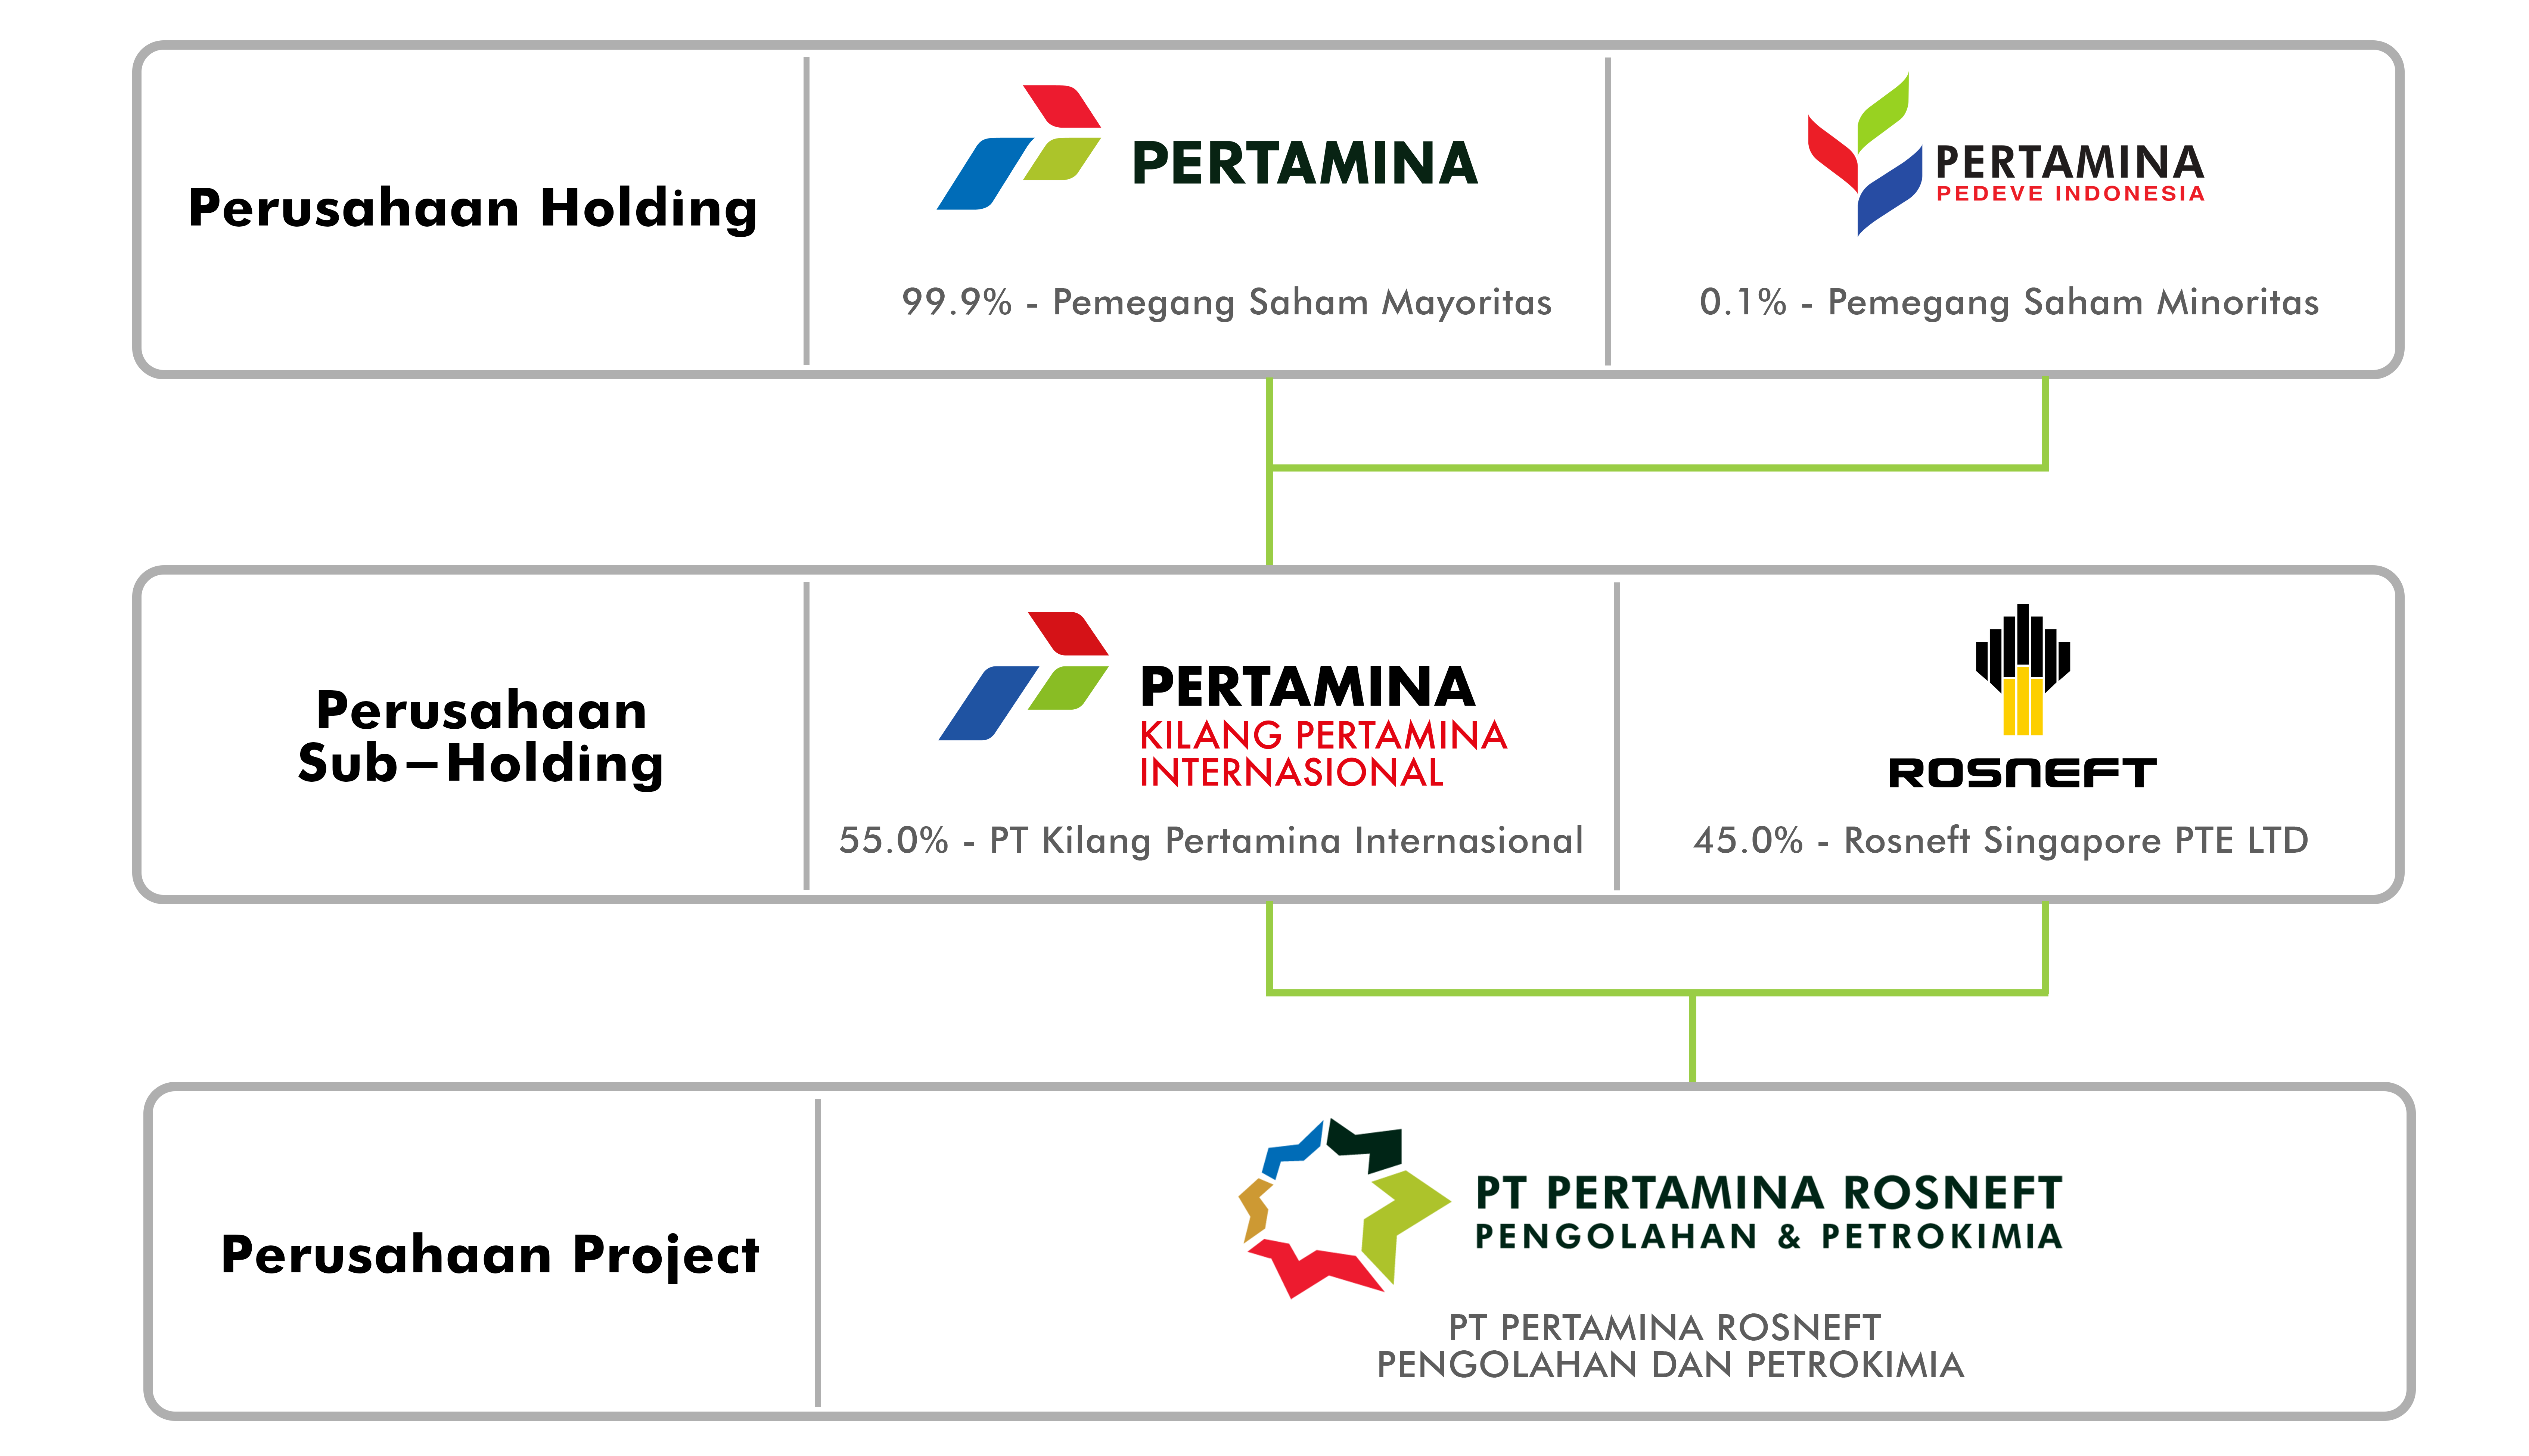 Pemegang Saham/Shareholders